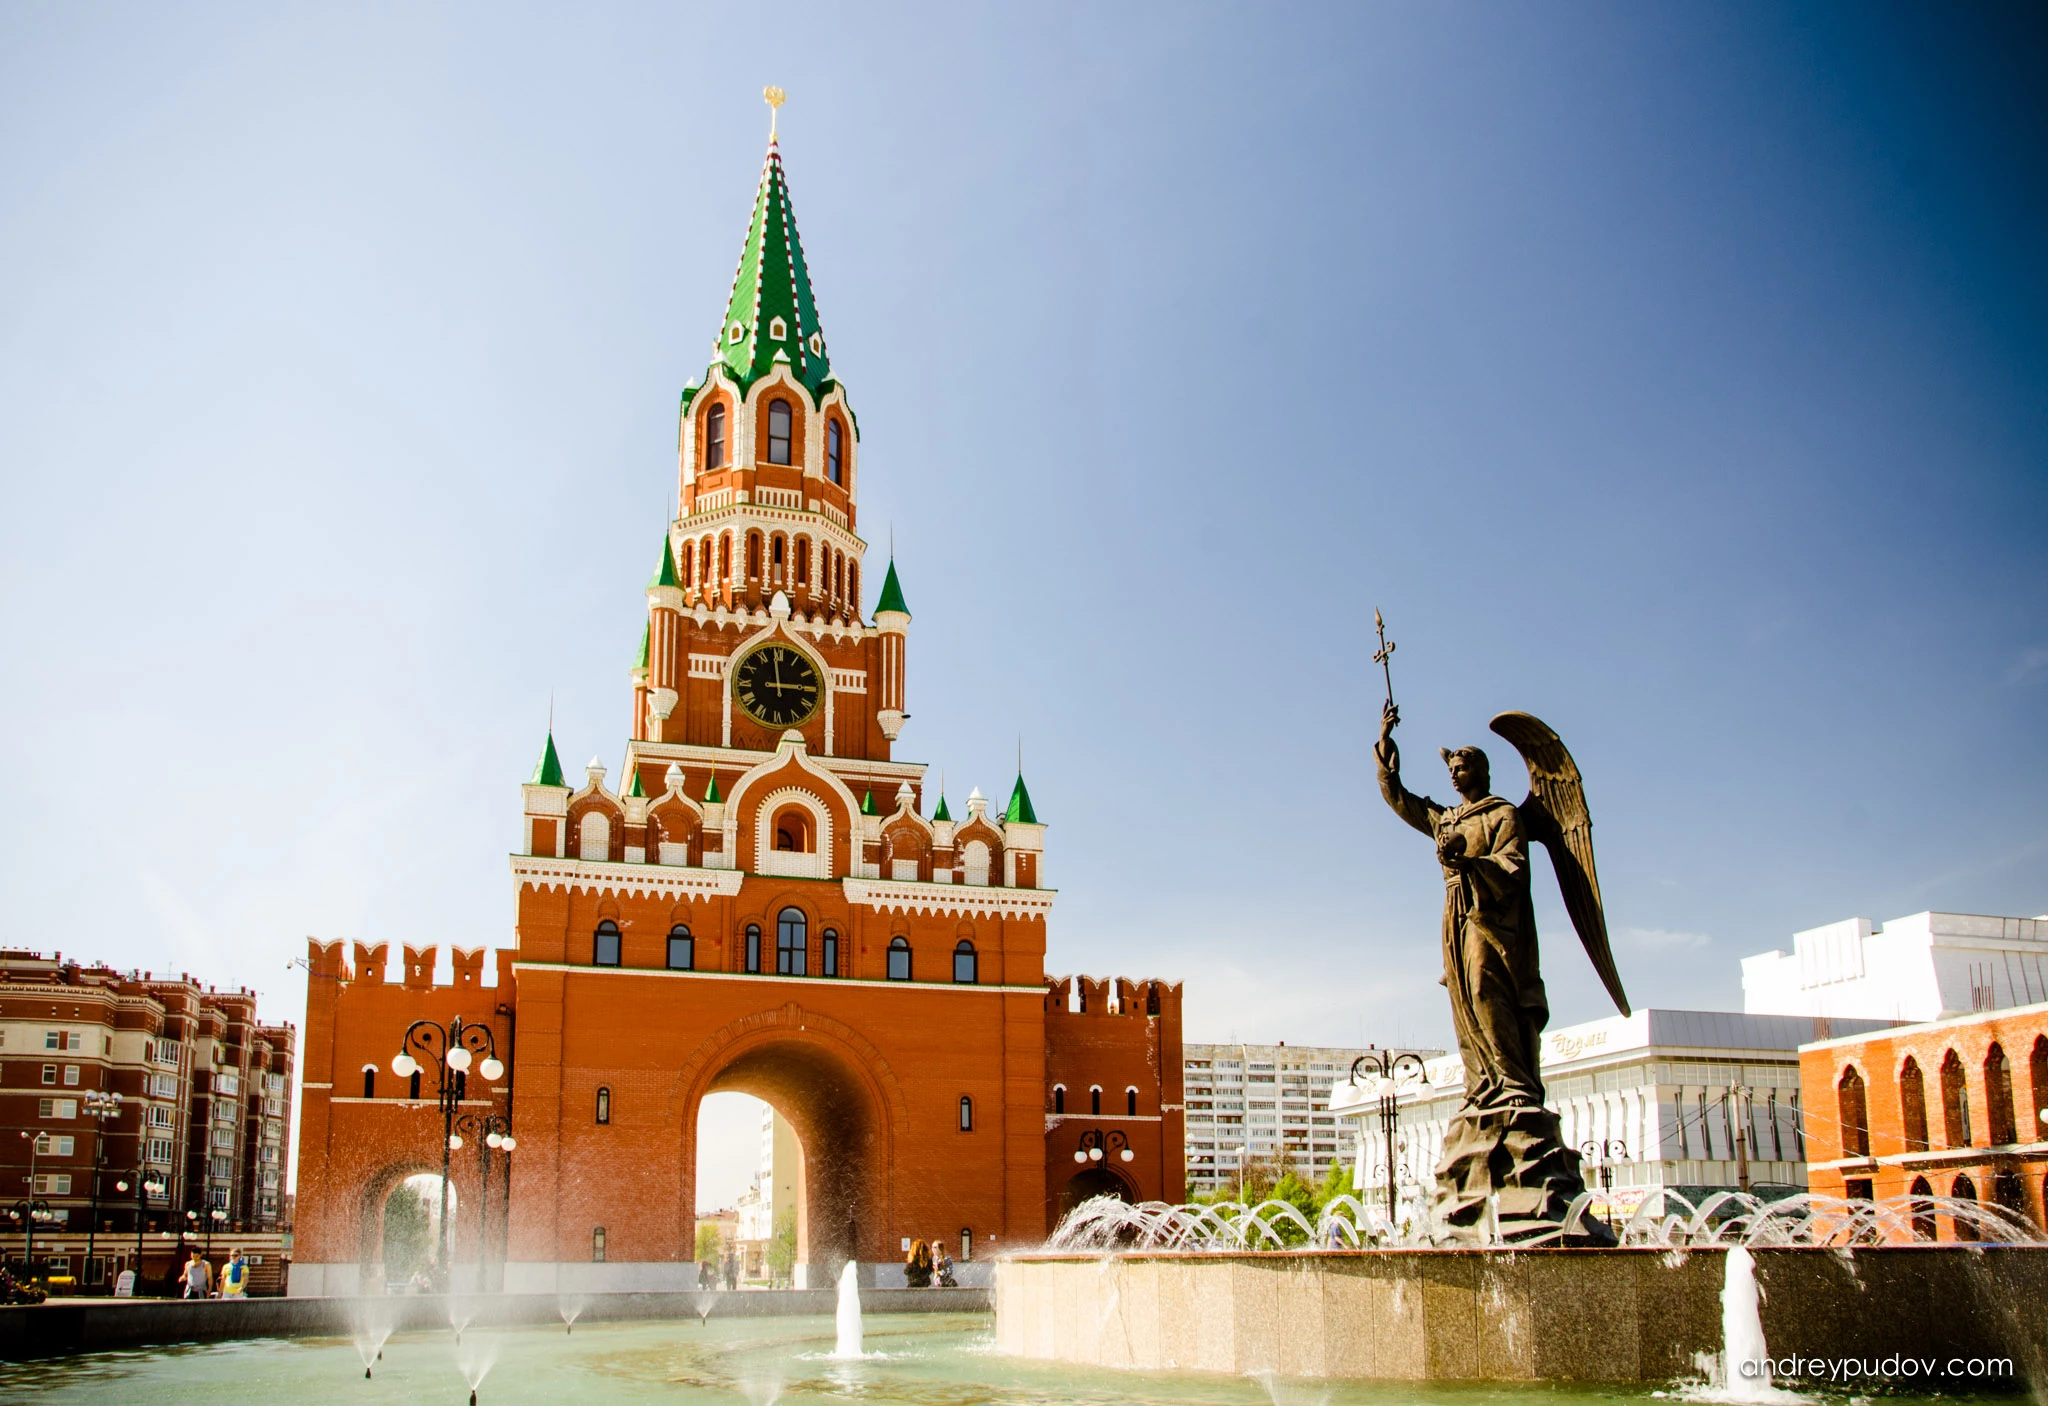 The Blagoveshchenskaya Tower is another smaller replica of Moscow's Kremlin Spasskaya Tower in Yoshkar-Ola.